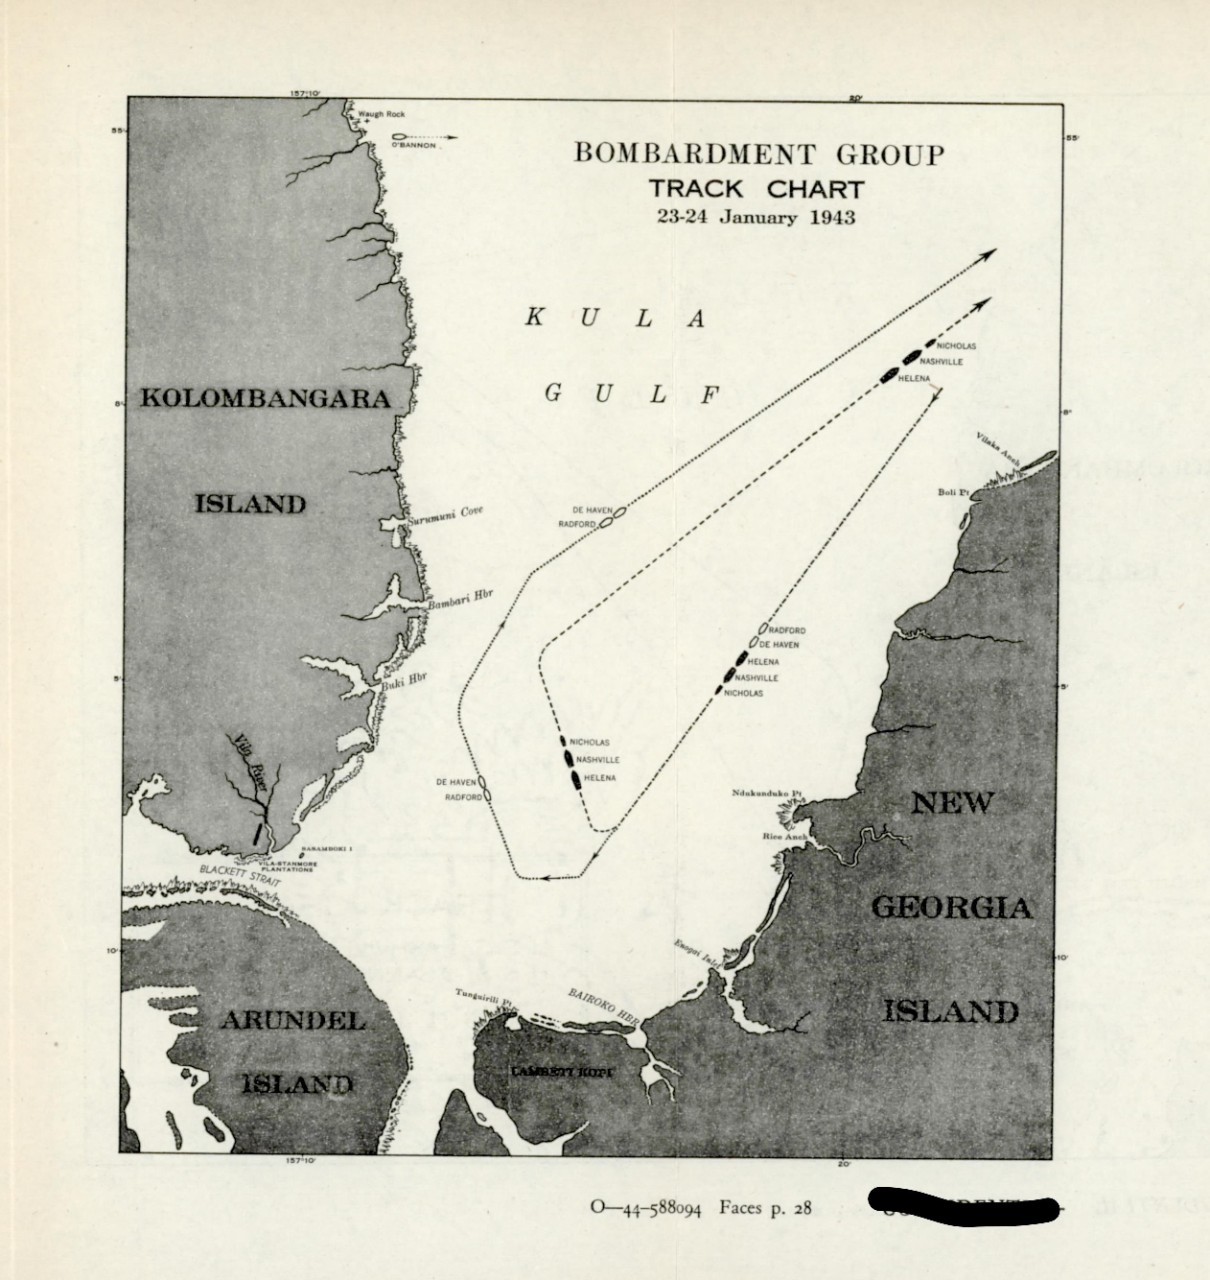 Bombardment Group Track Chart, 23-24 January 1943